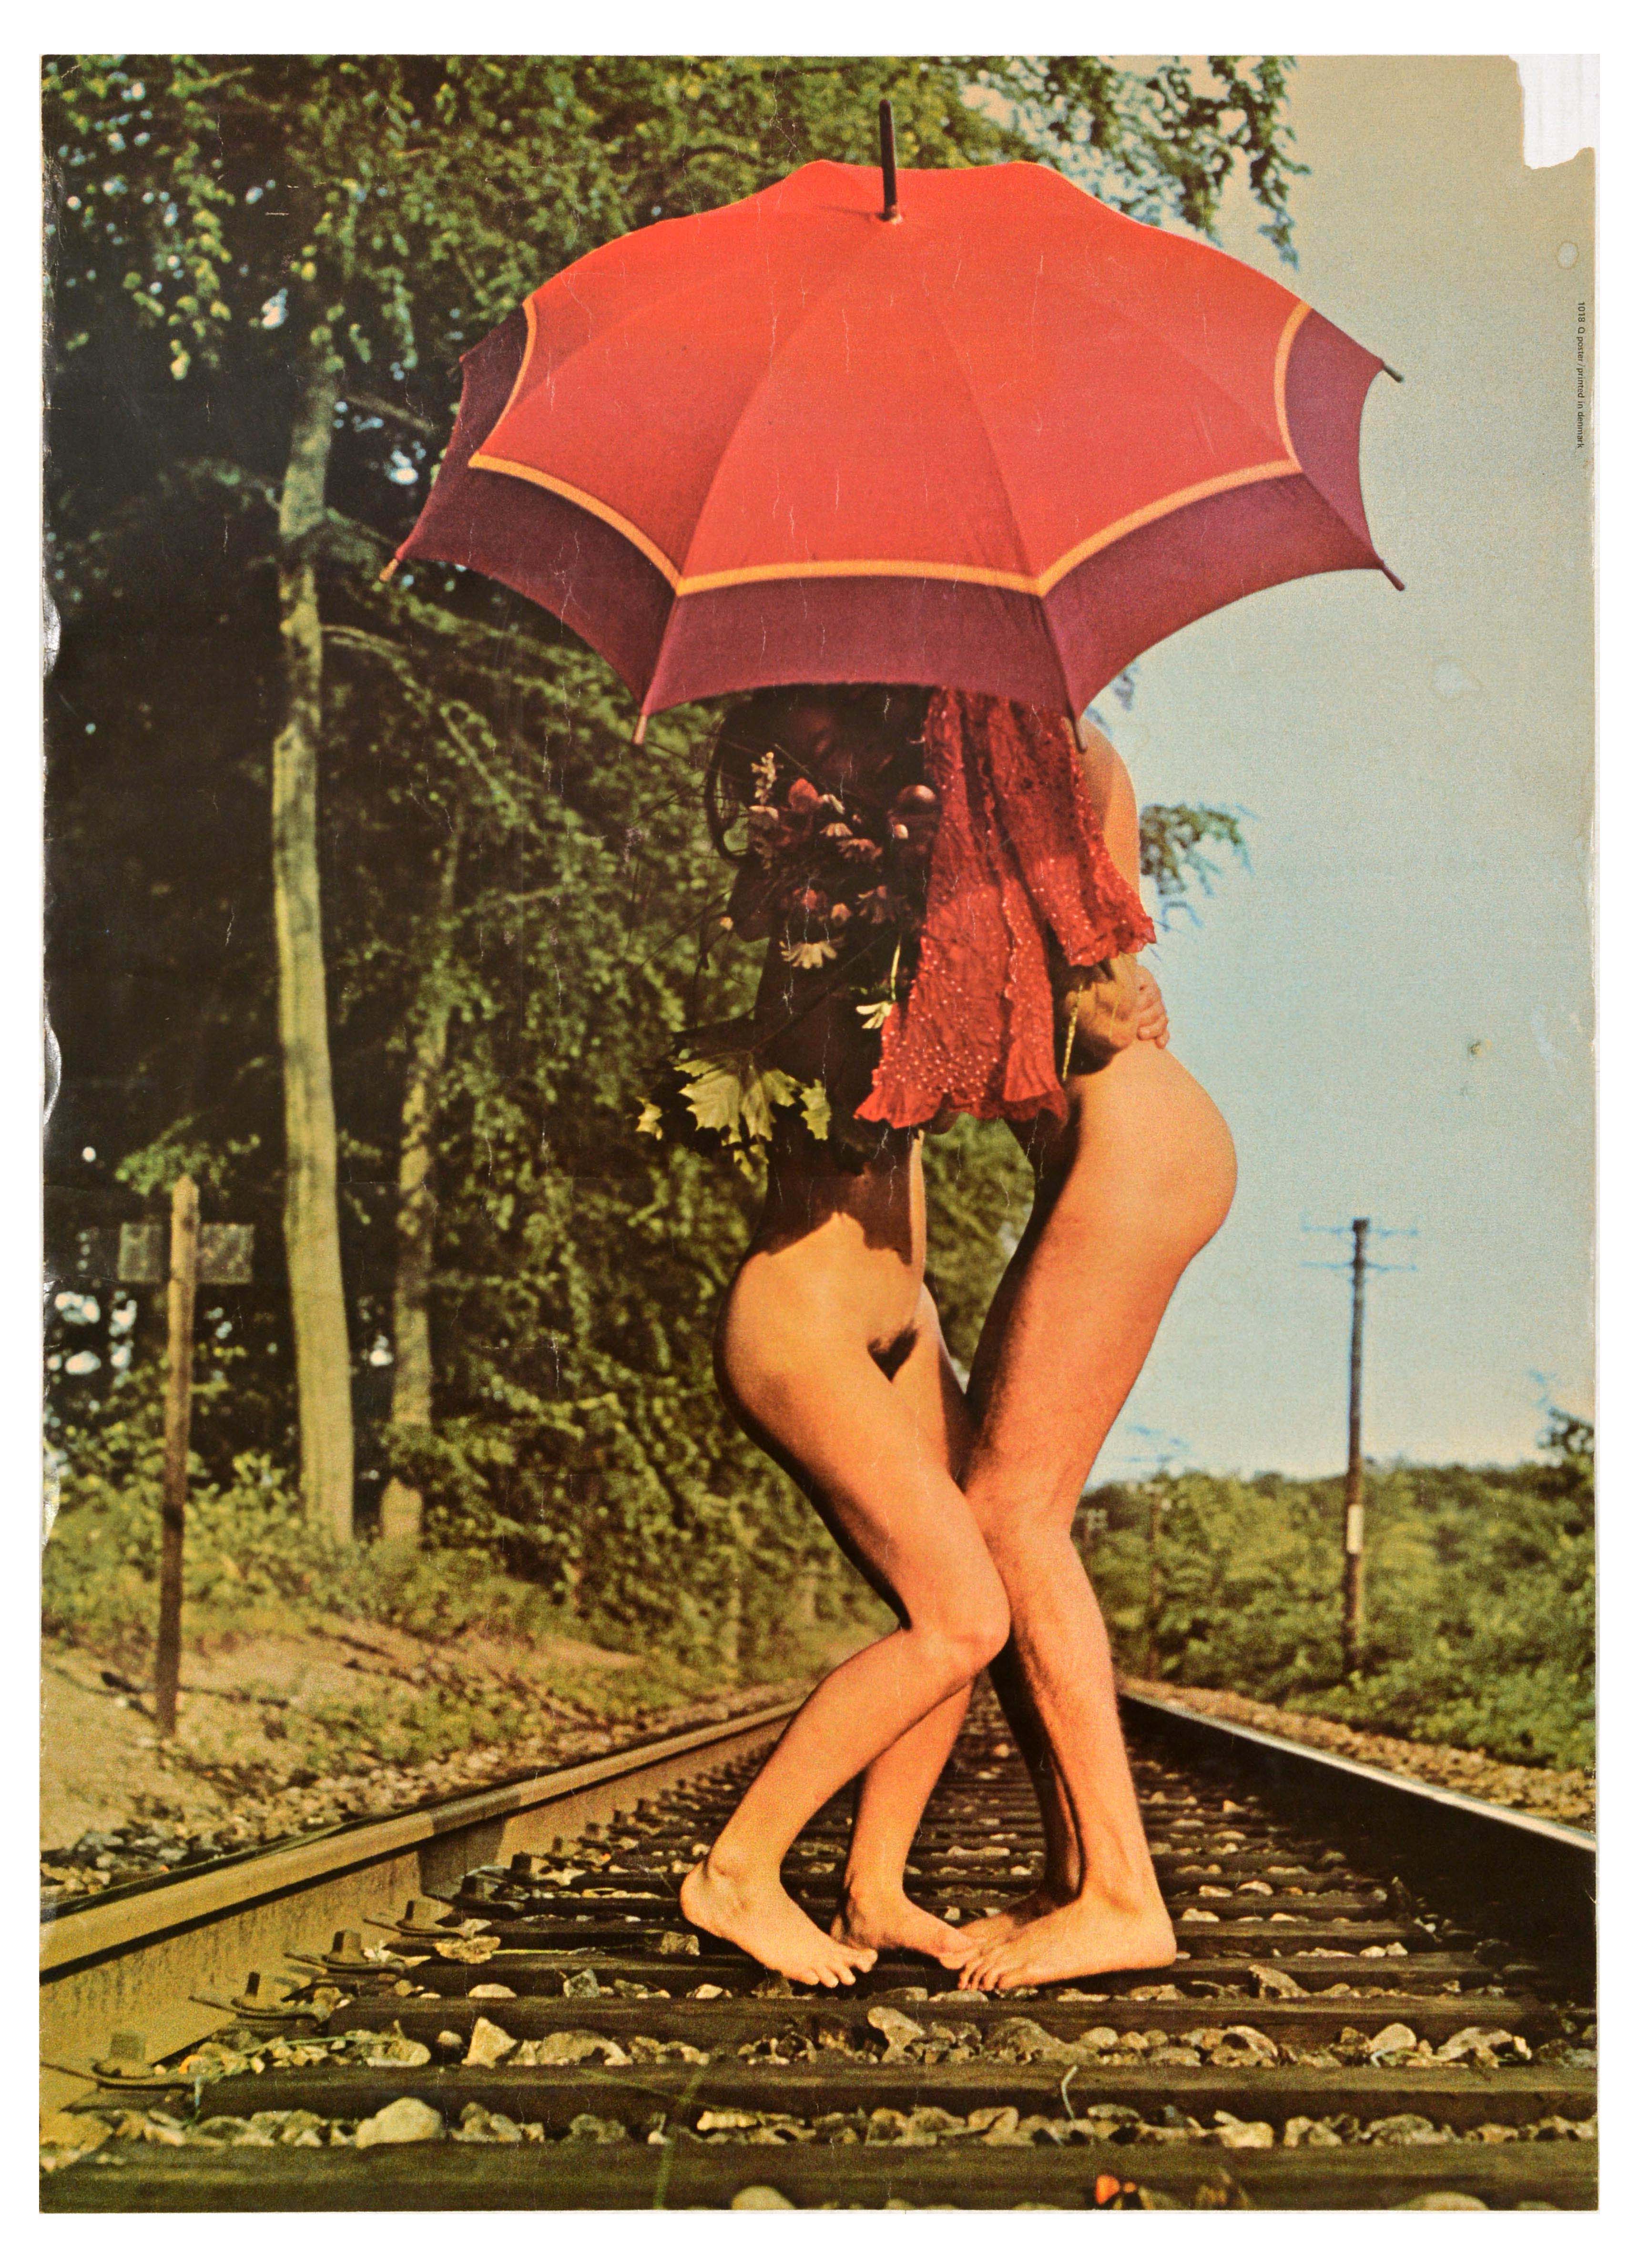 Topless Nude Women Erotic Poster Set - Image 4 of 6